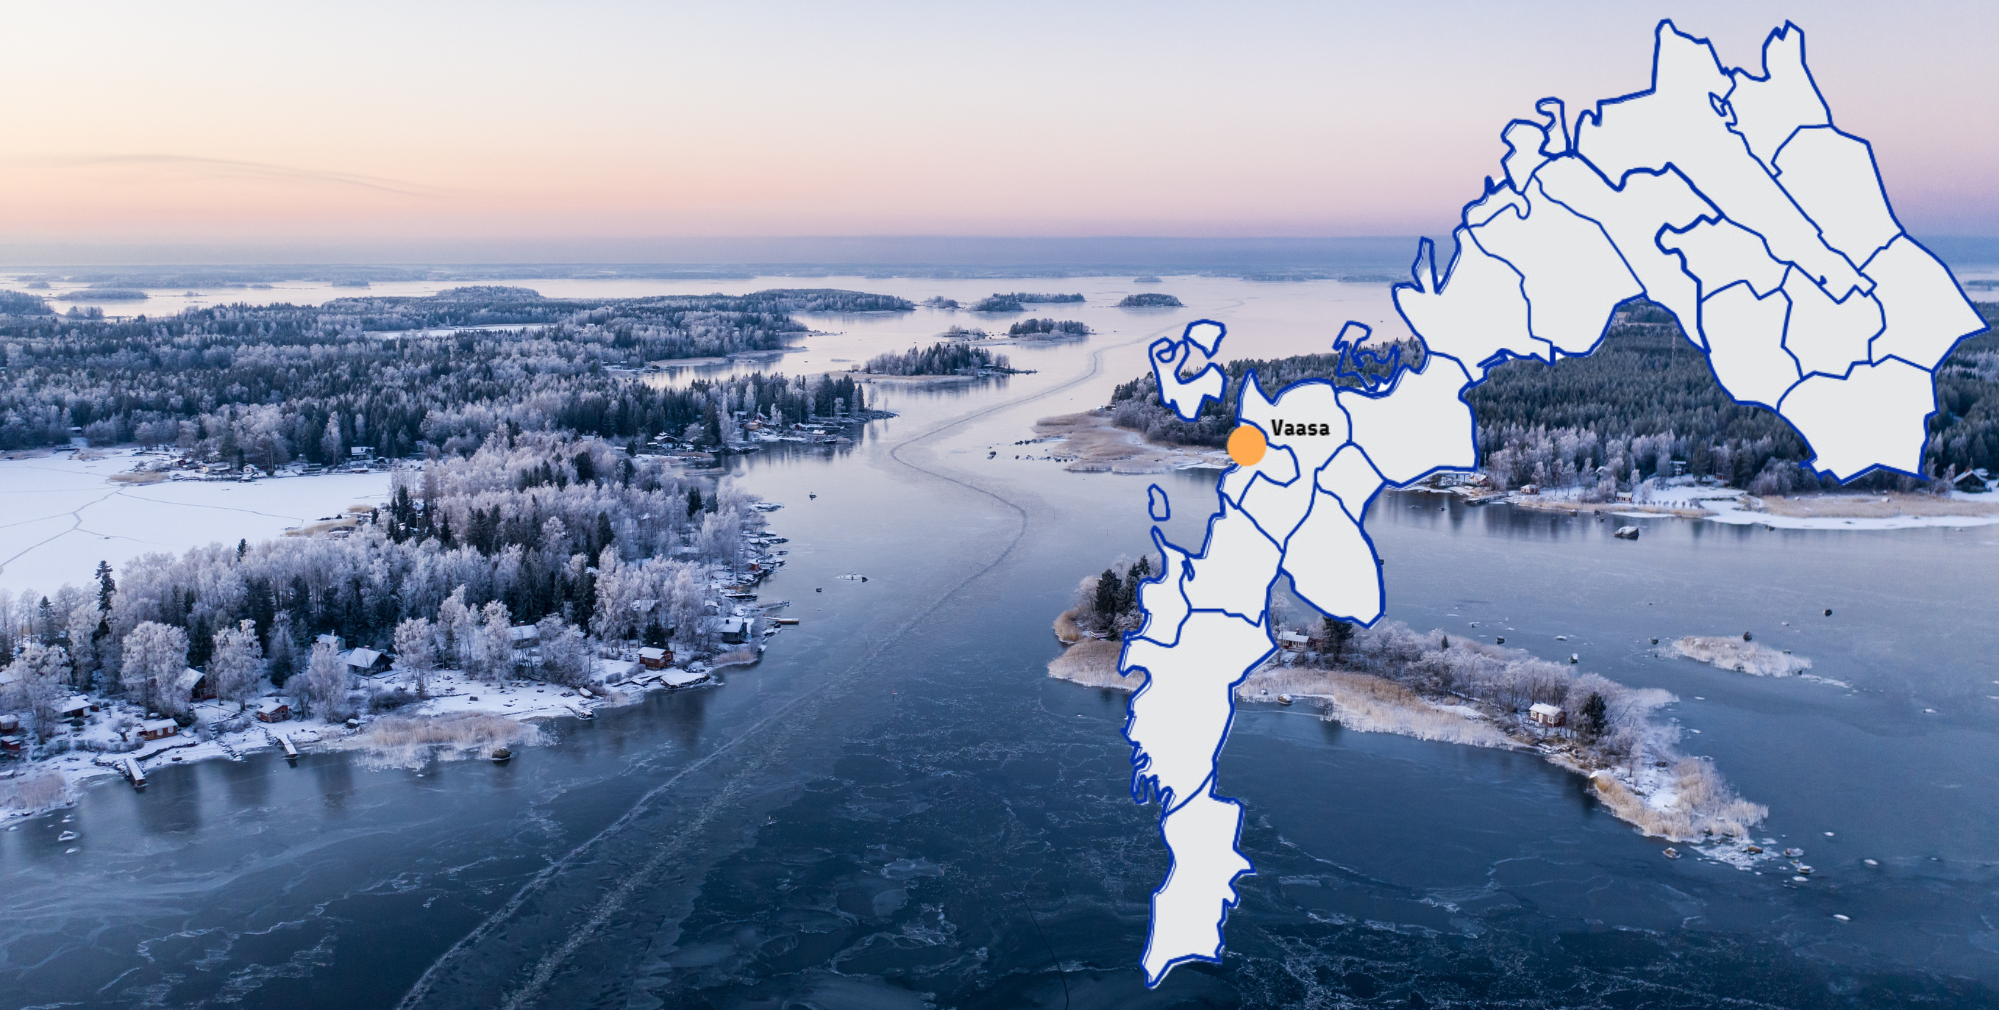 Vaasa archipelago and a map of Ostrobothnia with Vaasa marked.